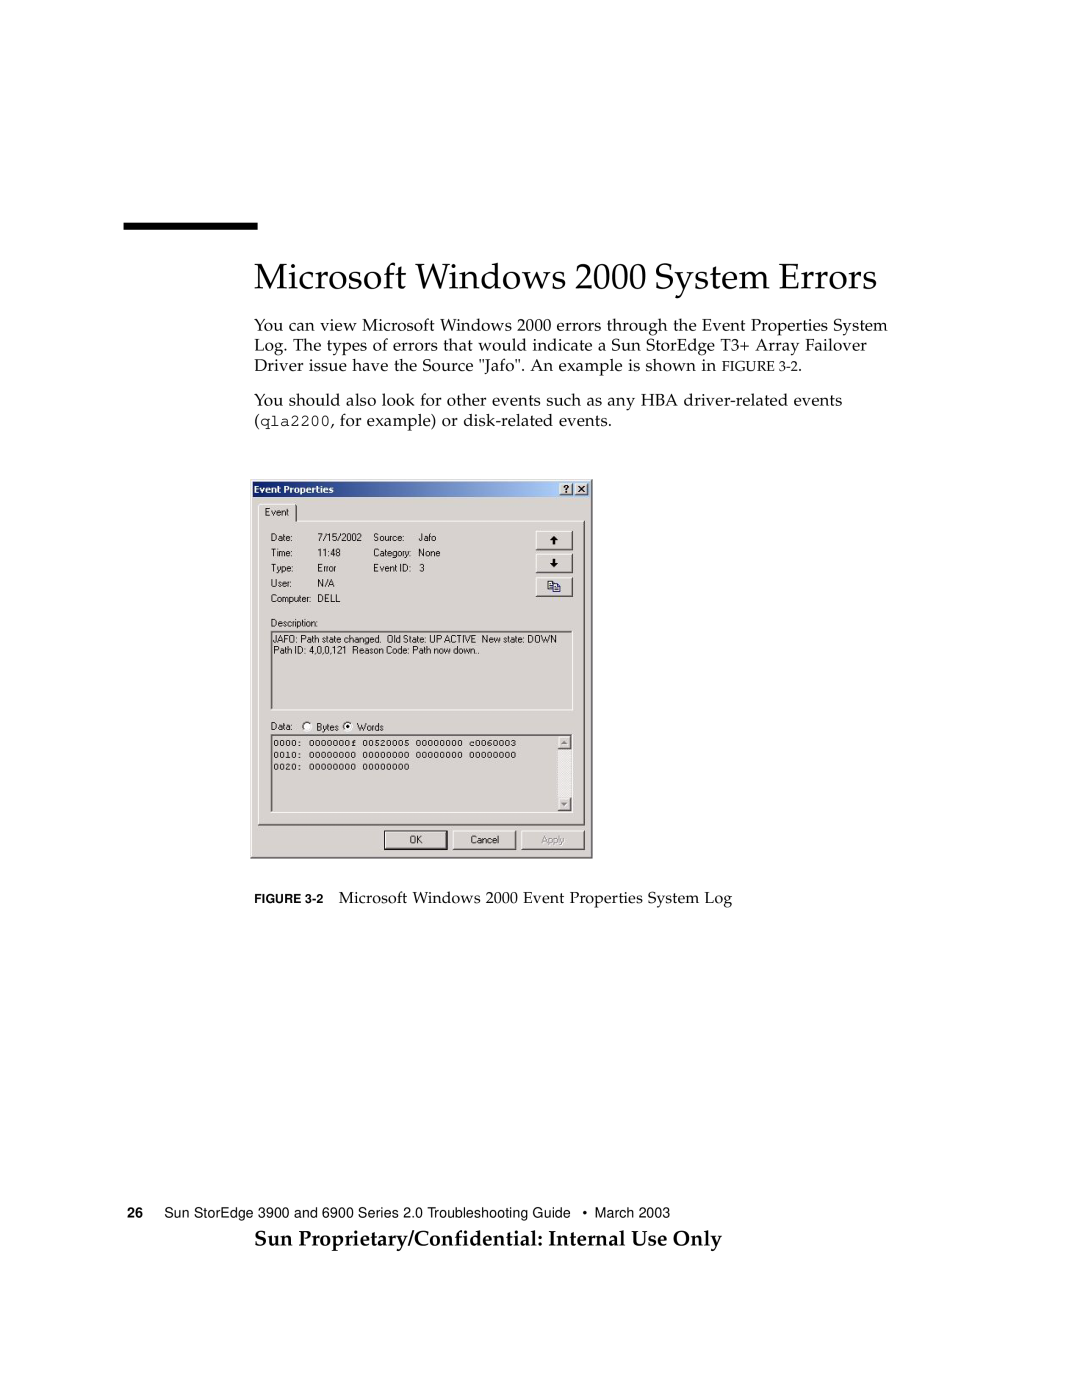 Sun Microsystems 3900, 6900 manual Microsoft Windows 2000 System Errors, Sun Proprietary/Confidential Internal Use Only 